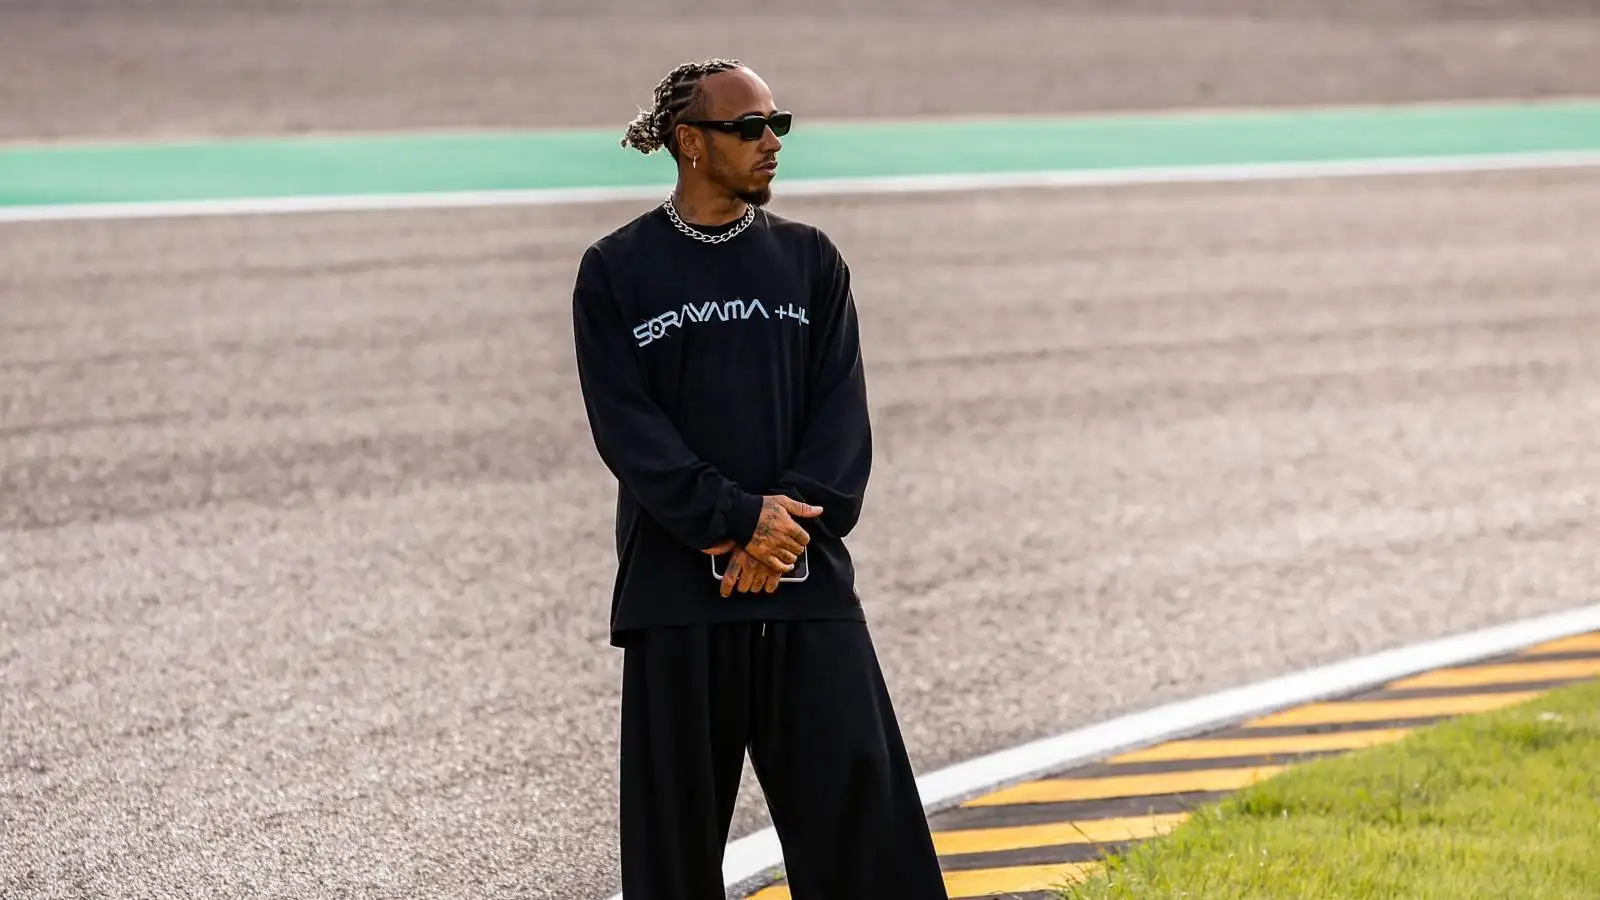 Lewis Hamilton, Mercedes, trackside at Suzuka.